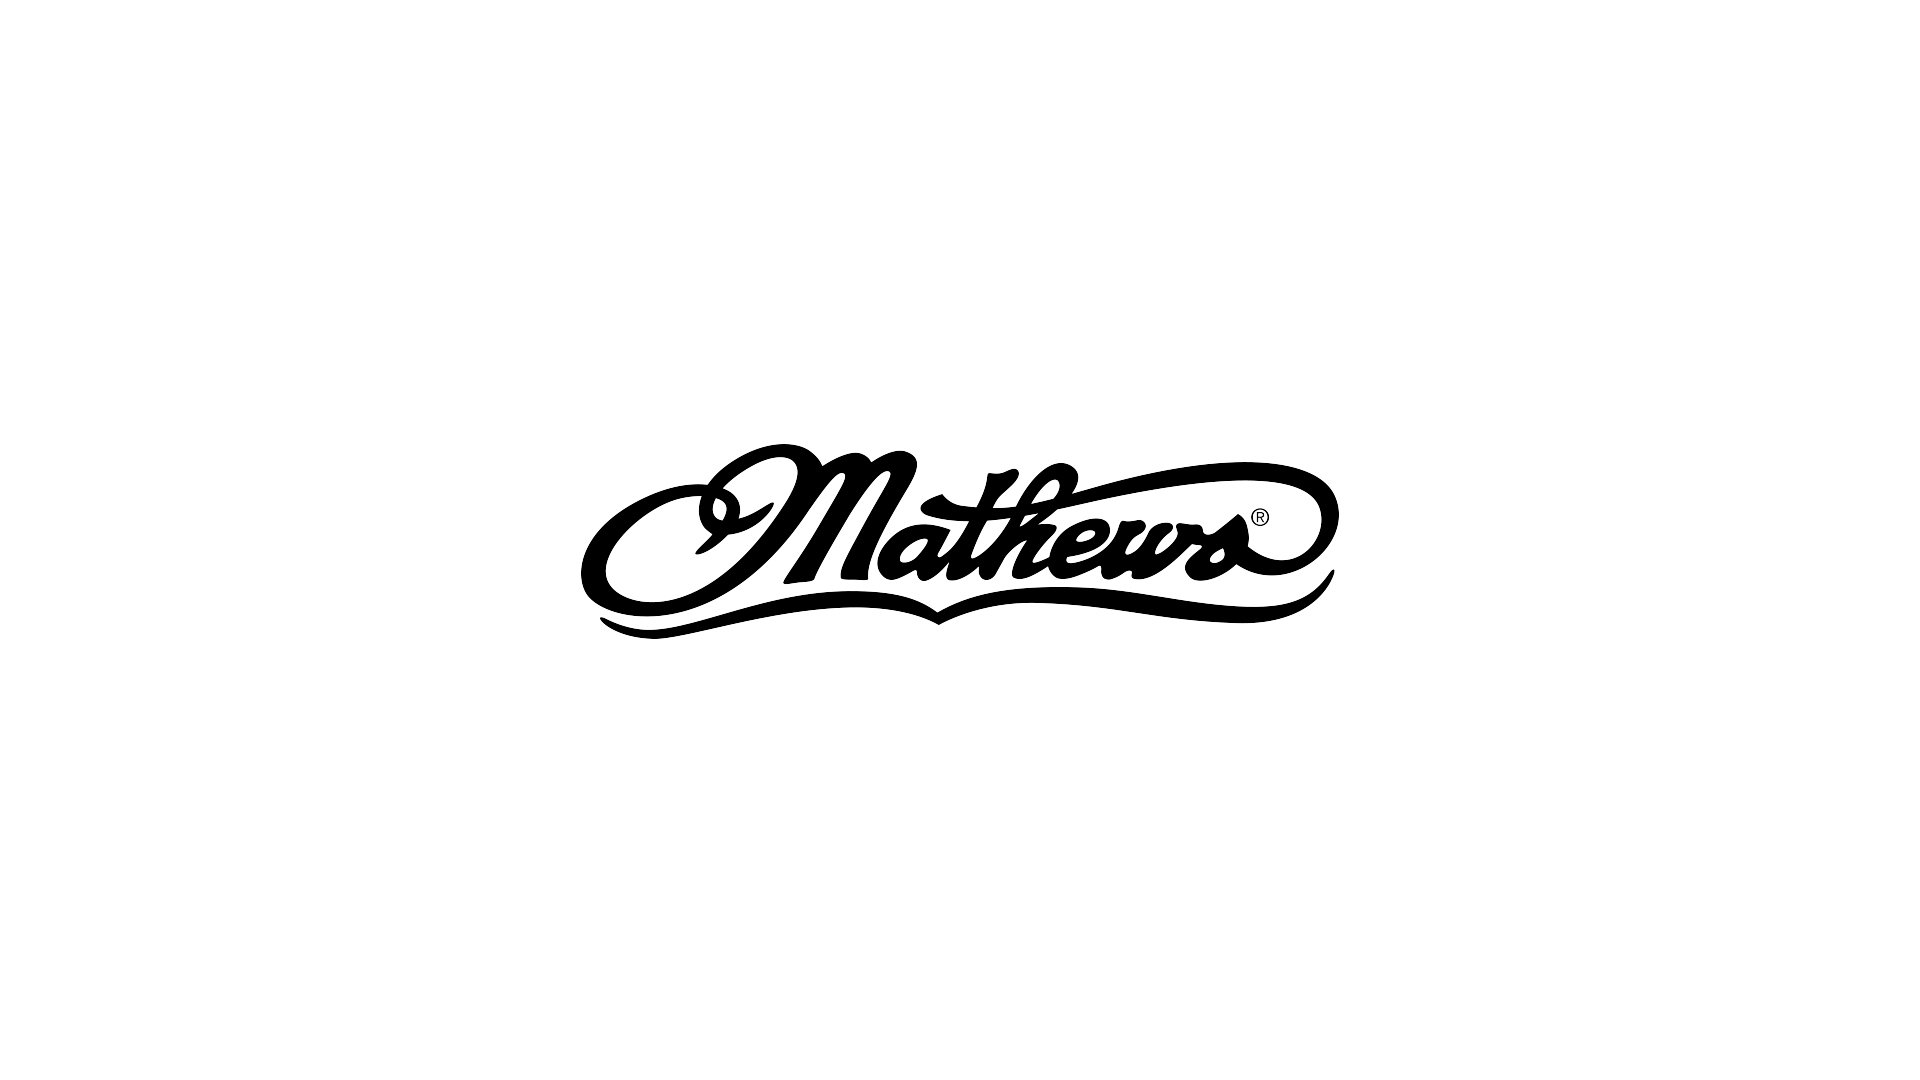 mathews site copy.jpg